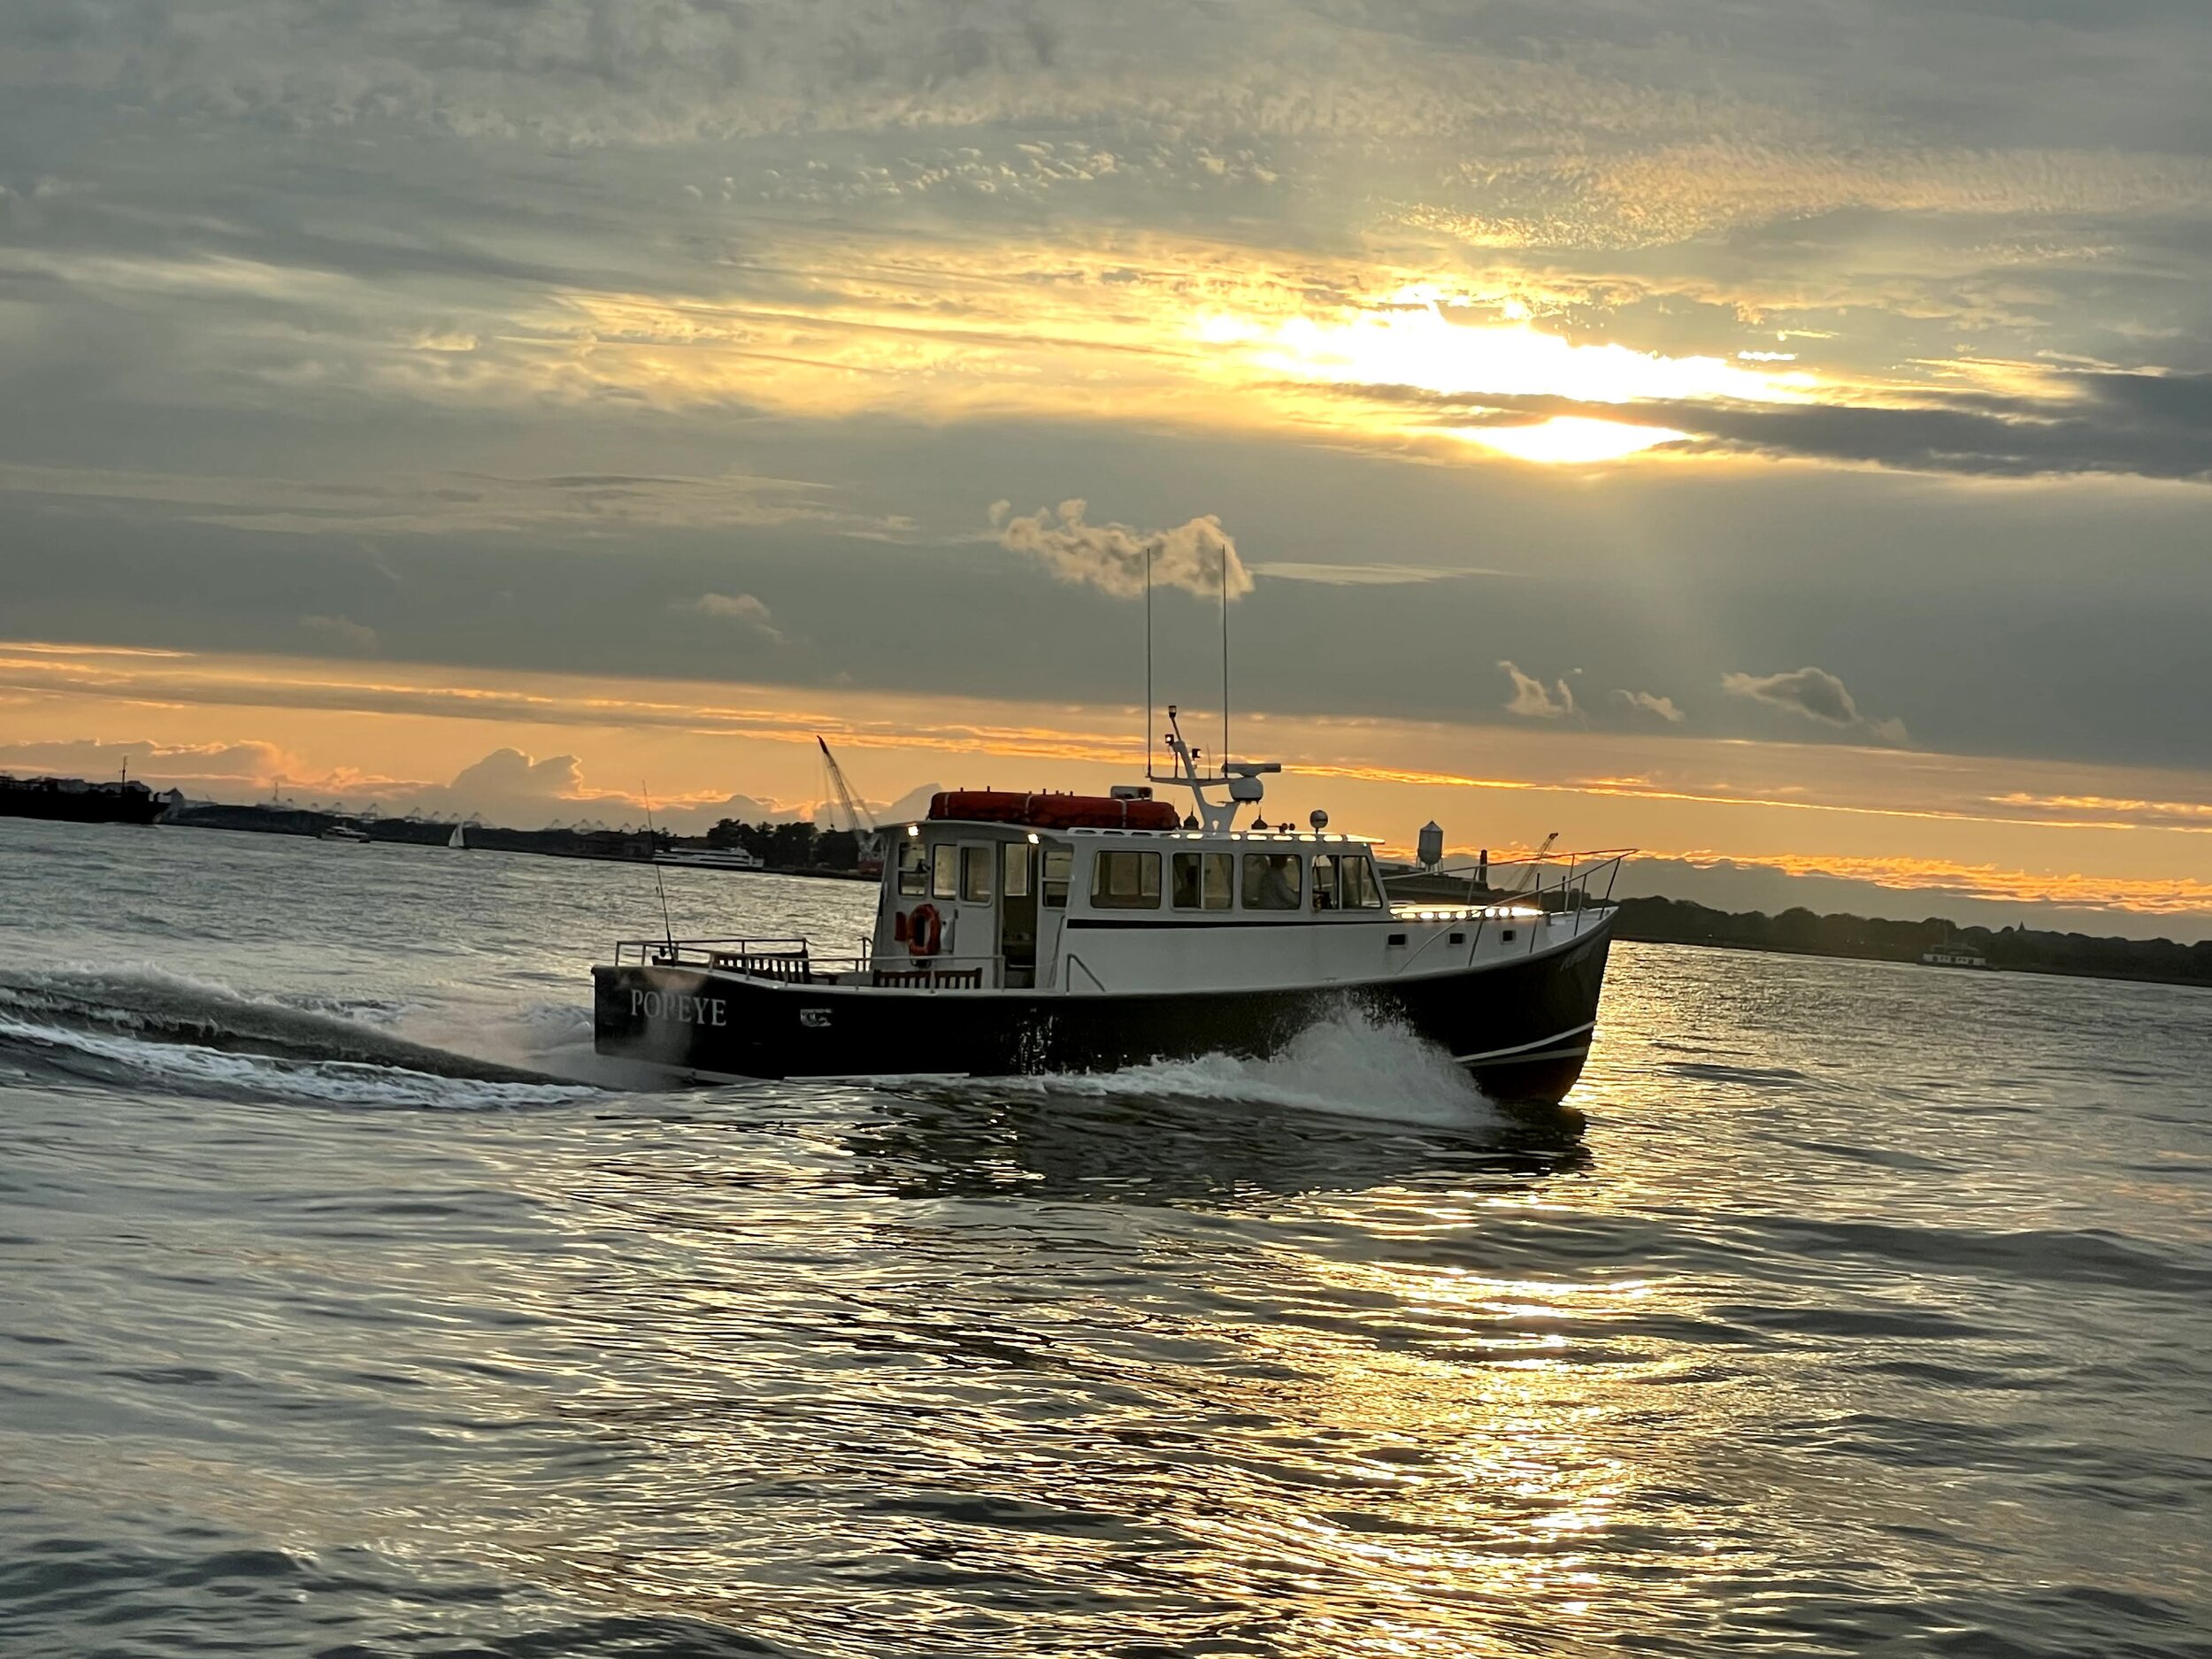 Hoboken Boat Charters — The Shipyard Marina